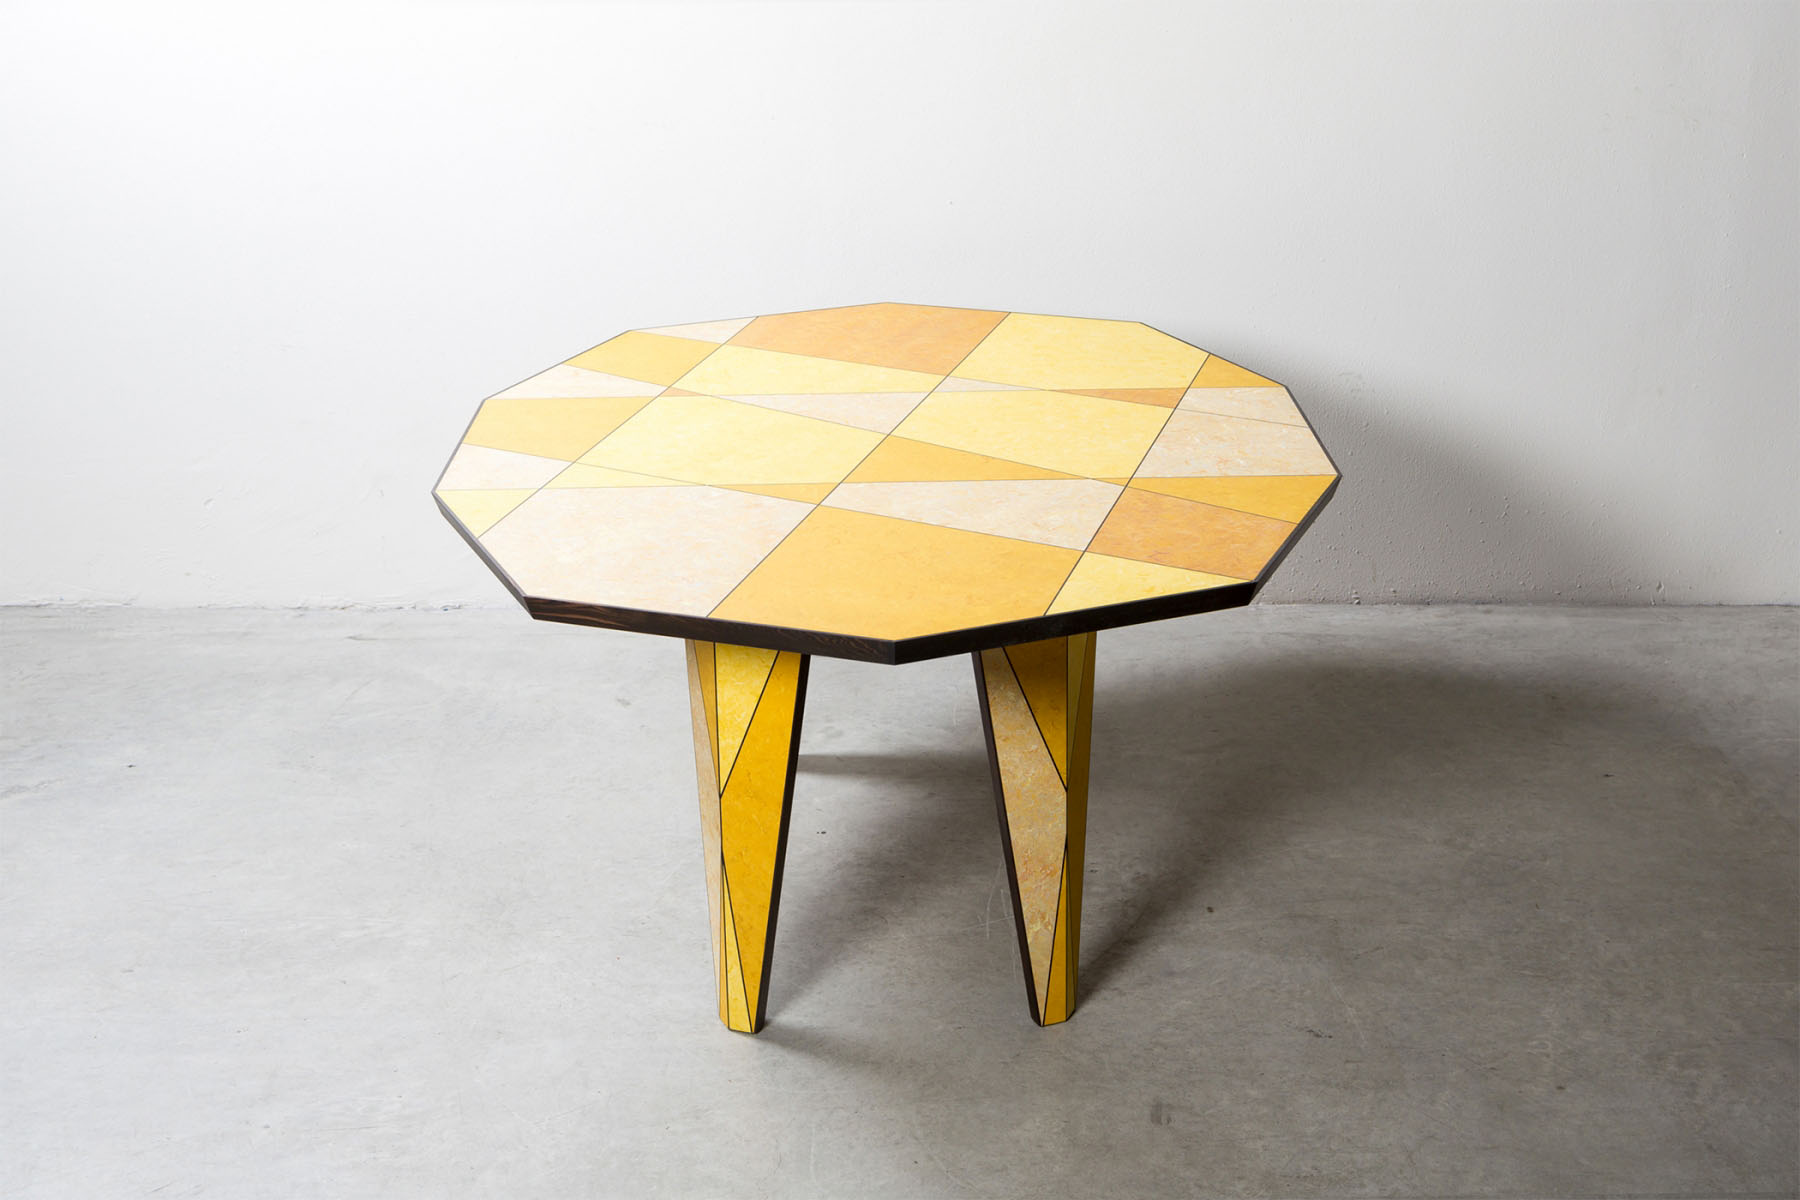 Lino table 02 Martino Gamper pic-4